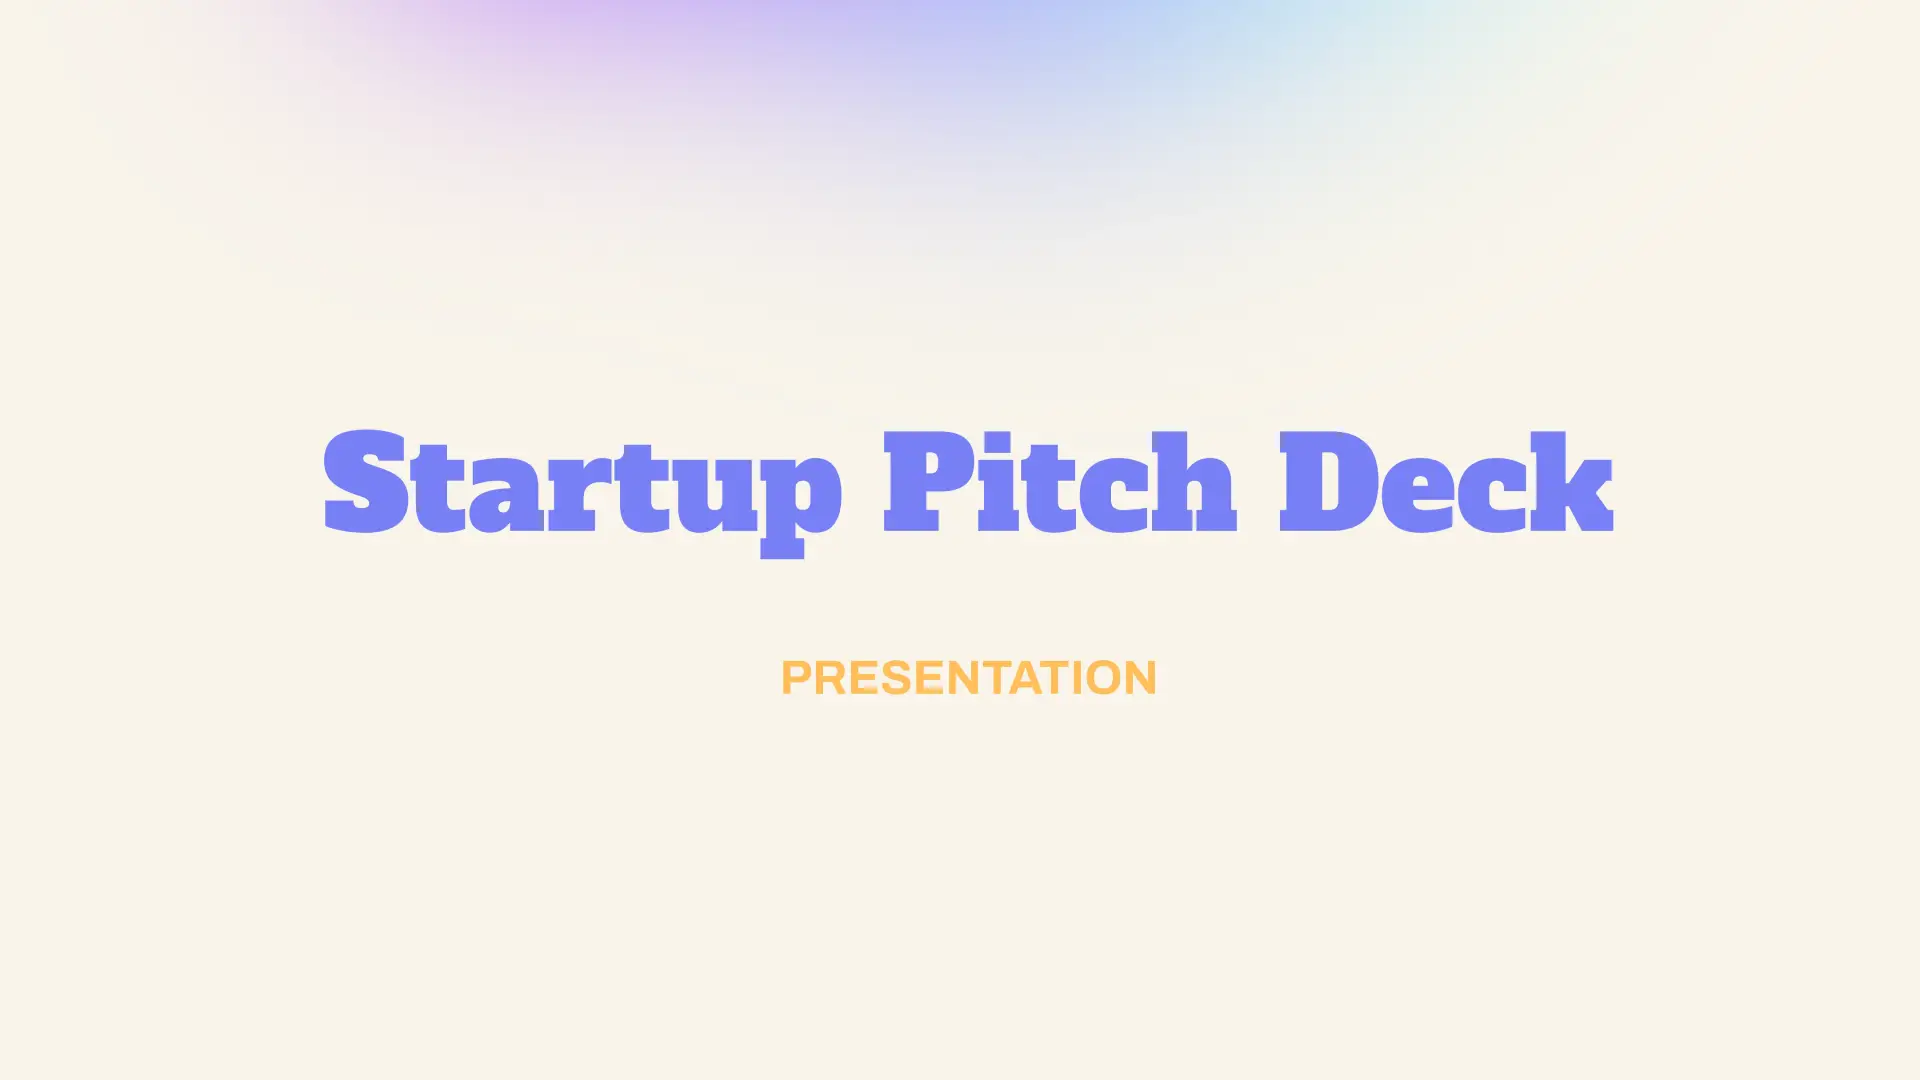 Startup Pitch Deck Template for Google Slides